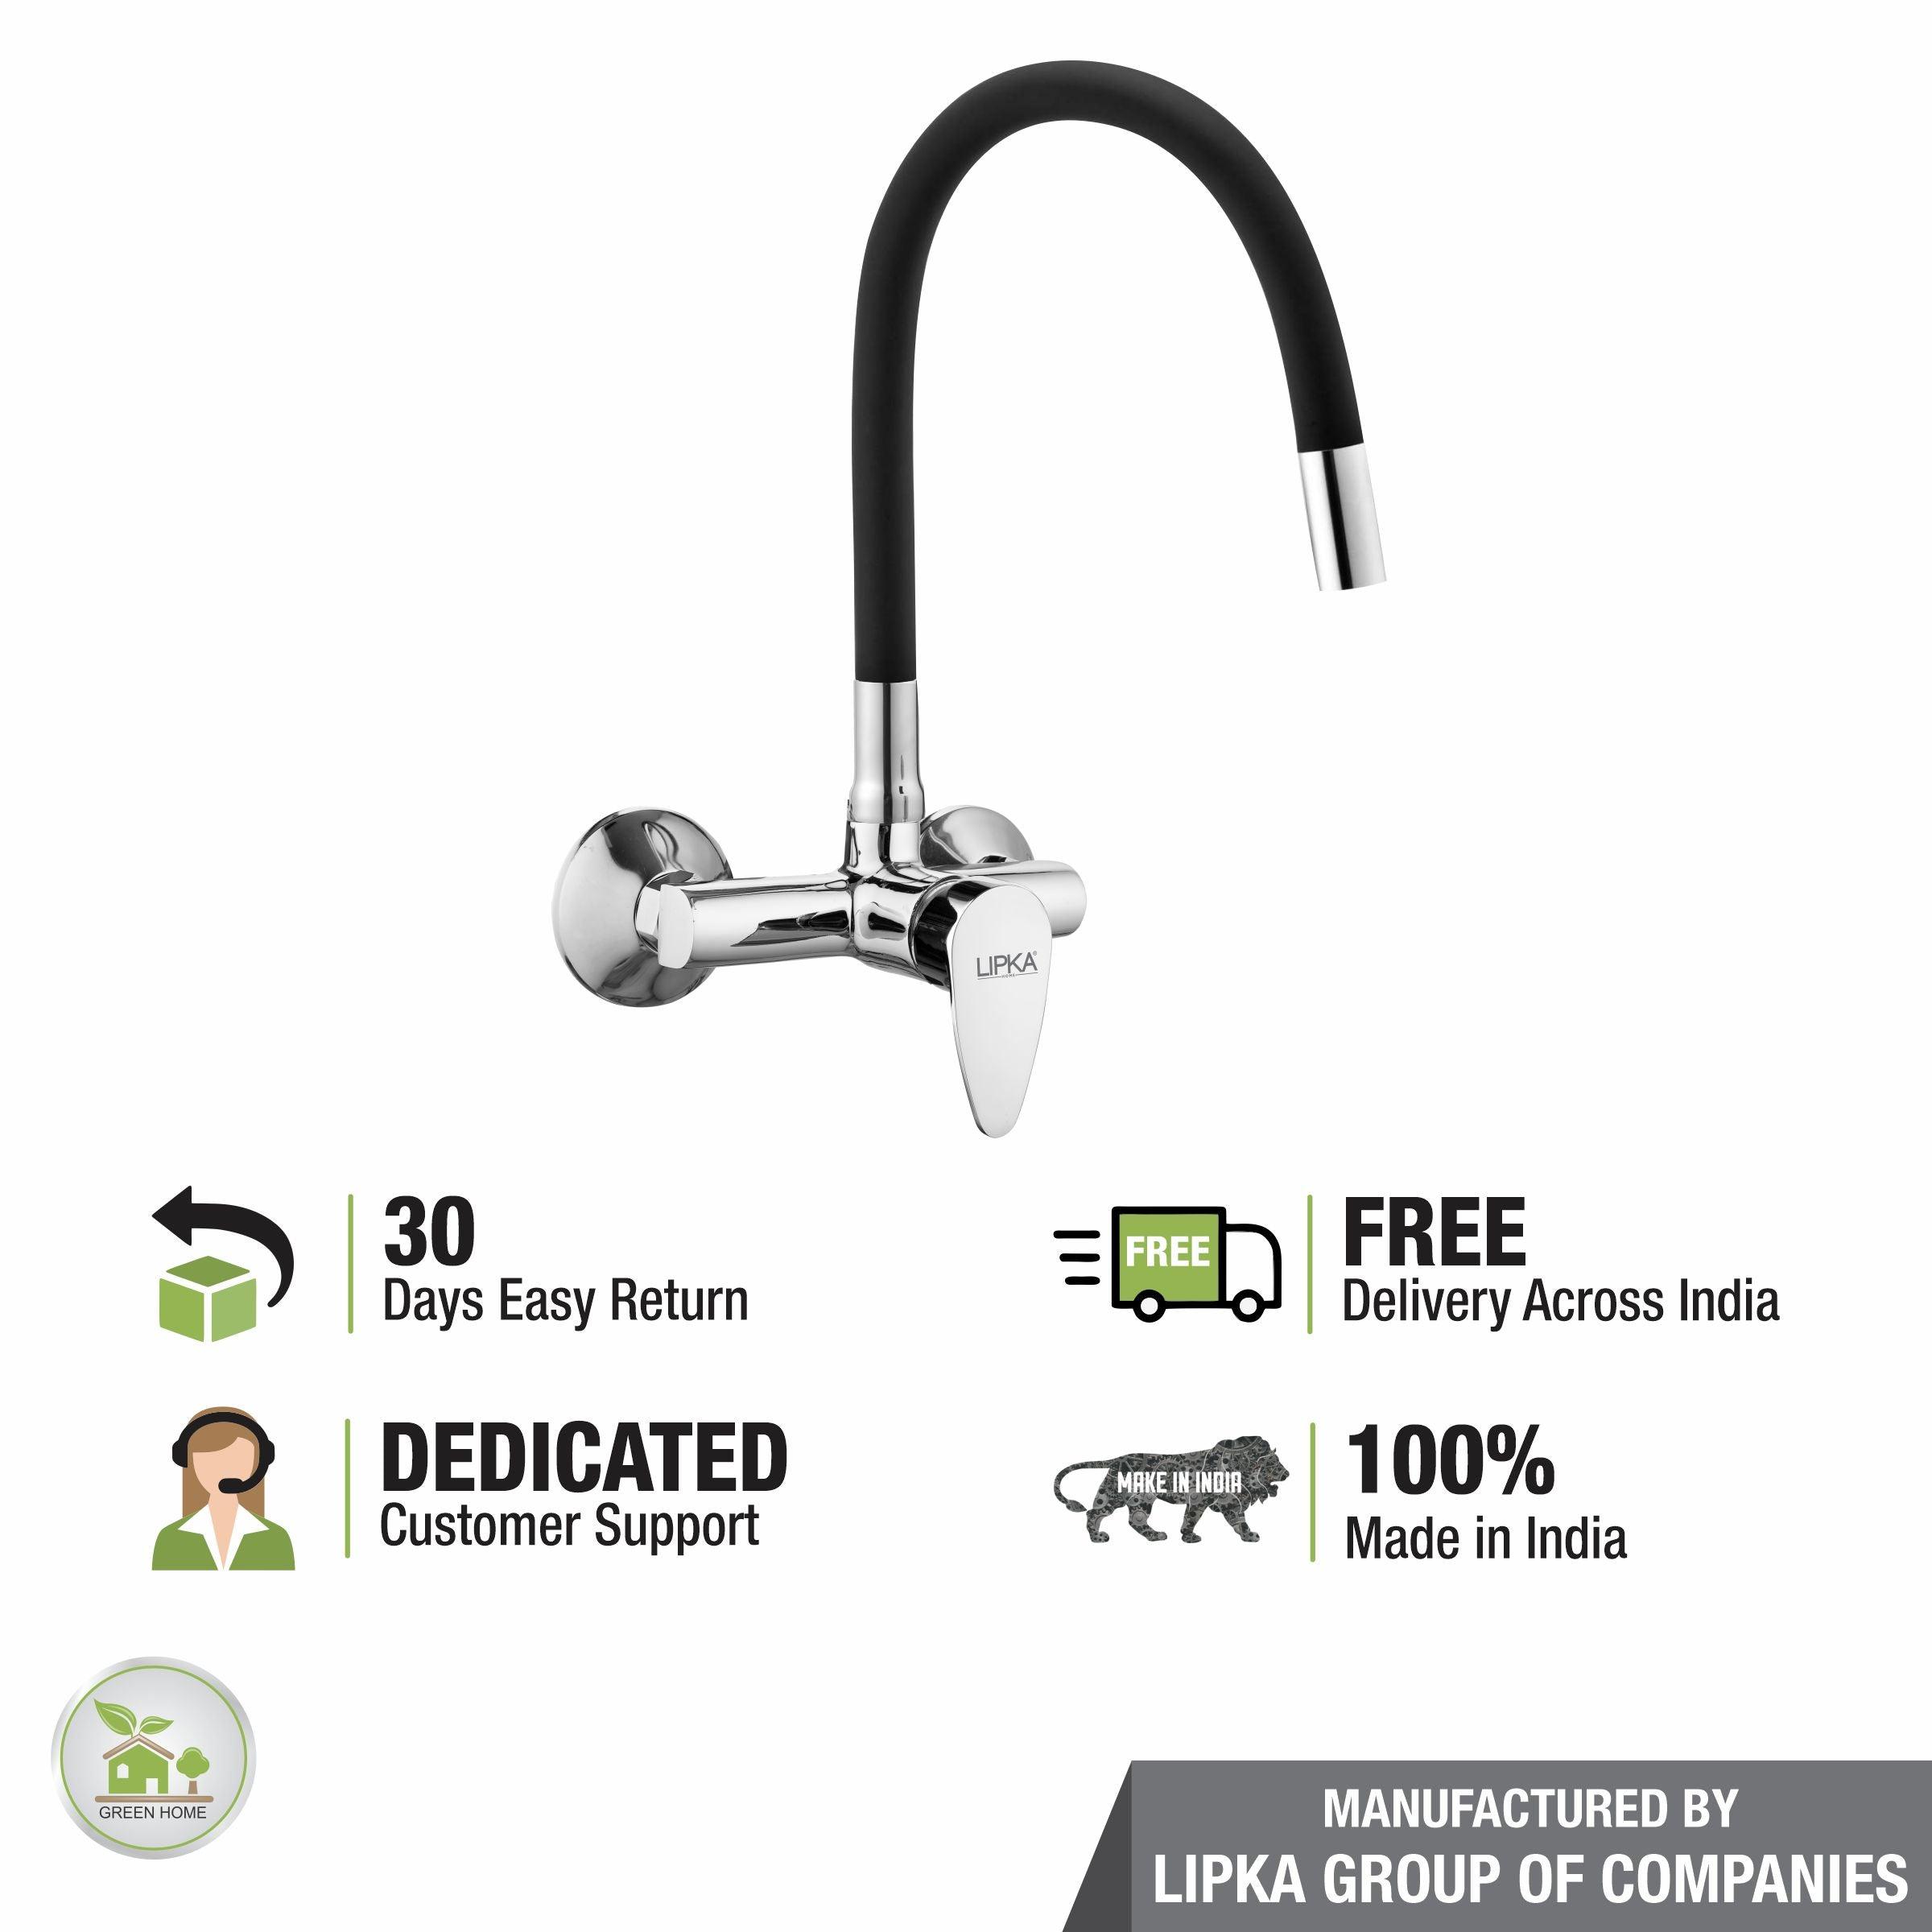 Virgo Single Lever Sink Mixer with Black Flexible Silicone Spout (20 Inches) - LIPKA - Lipka Home